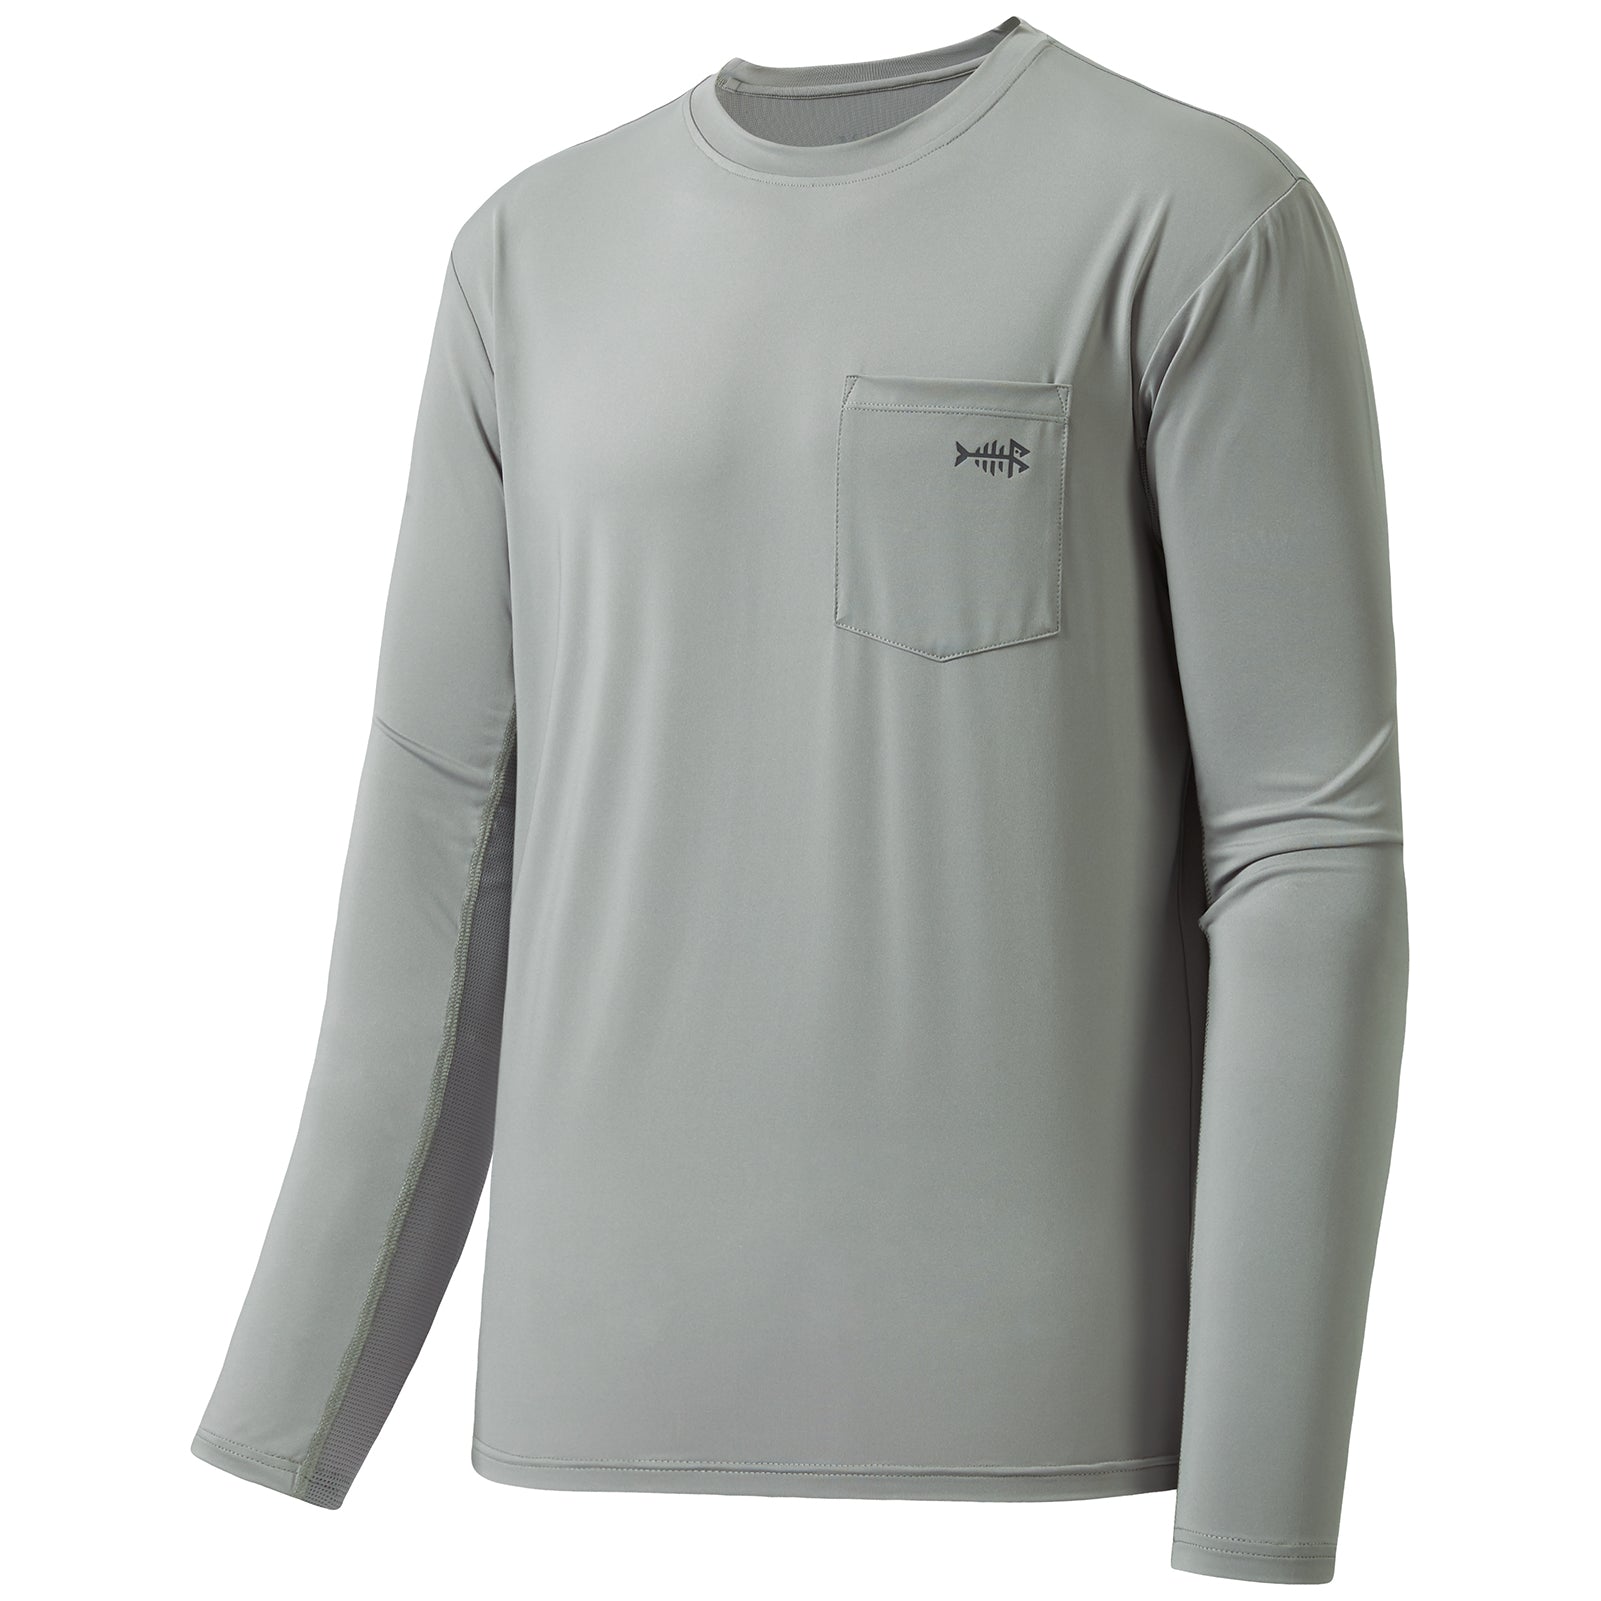 BASSDASH Men's UPF 50+ Sun Protection Fishing Shirt Short Sleeve UV T-Shirt  : Clothing, Shoes & Jewelry 